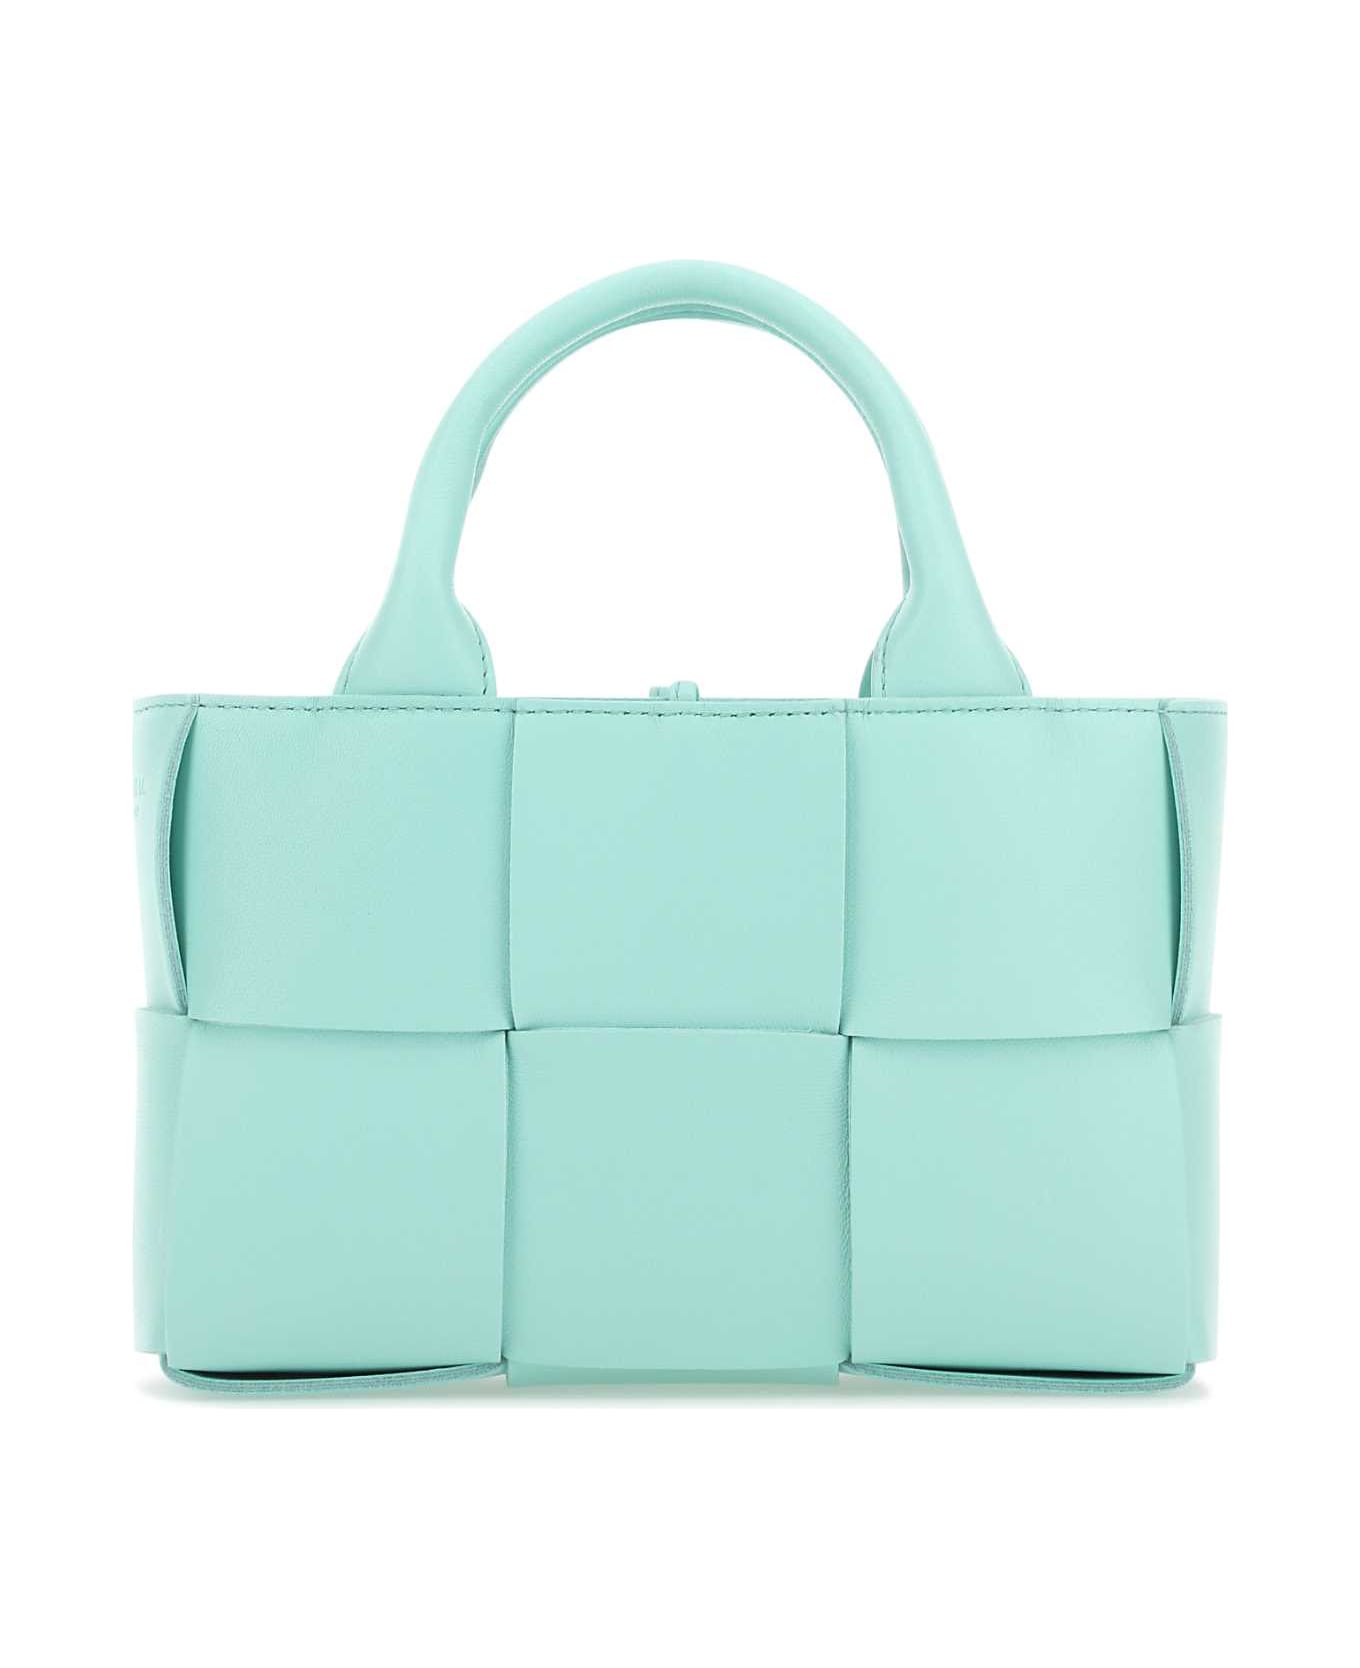 Bottega Veneta Light-blue Leather Candy Arco Handbag - PALEBLU トートバッグ